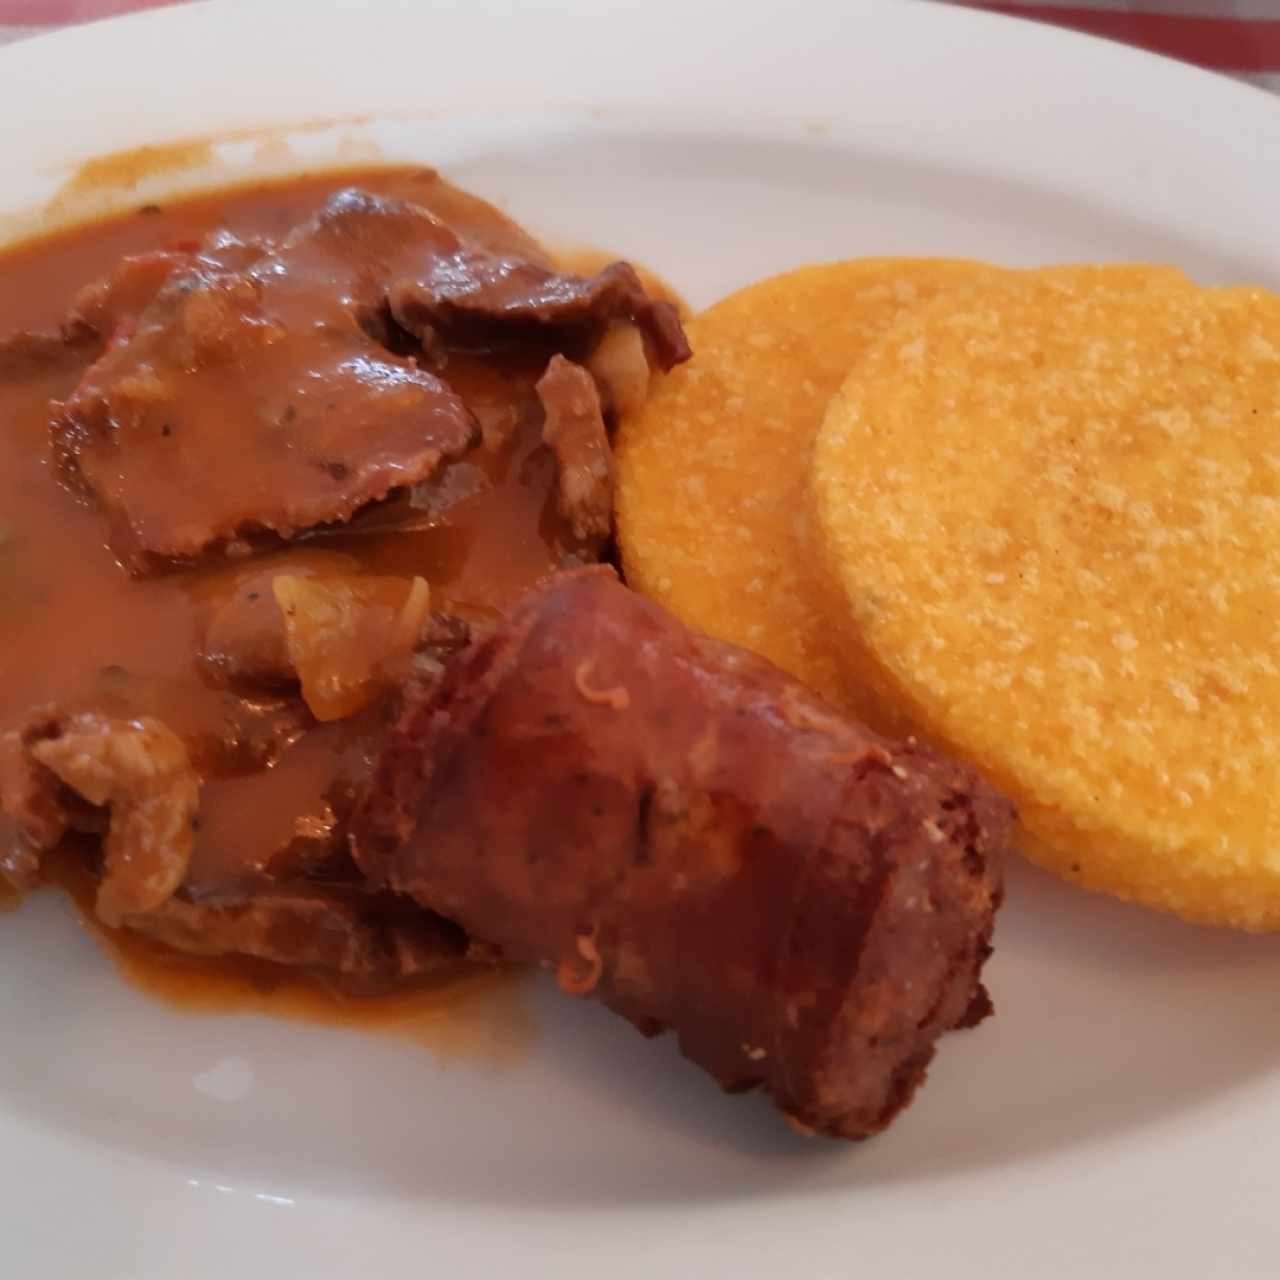 Desayuno especial - Bistec con salsa + Tortilla + Chorizo + Café o té + Jugo de naranja